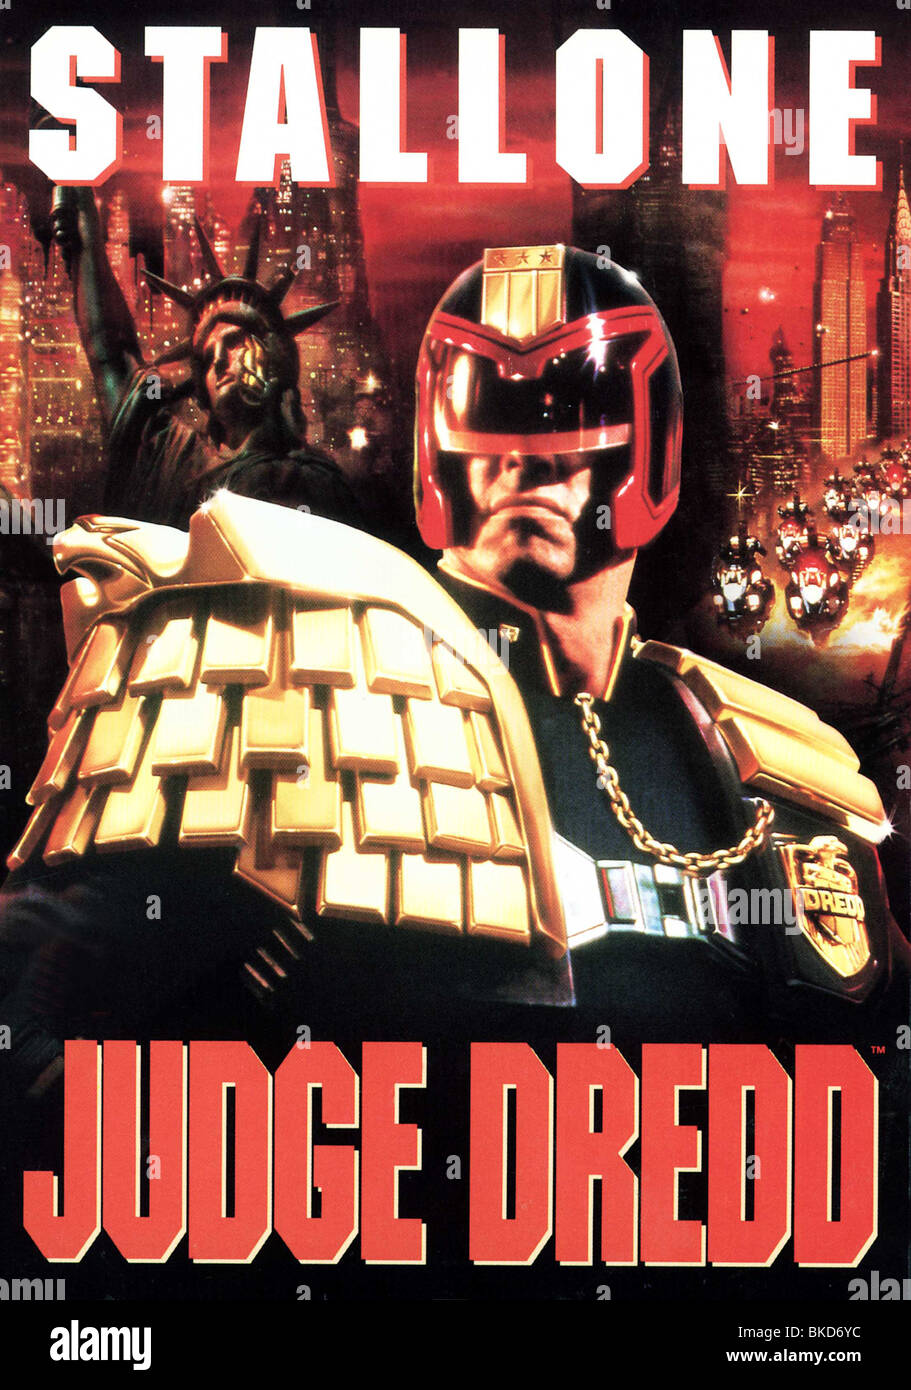 1995 Judge Dredd